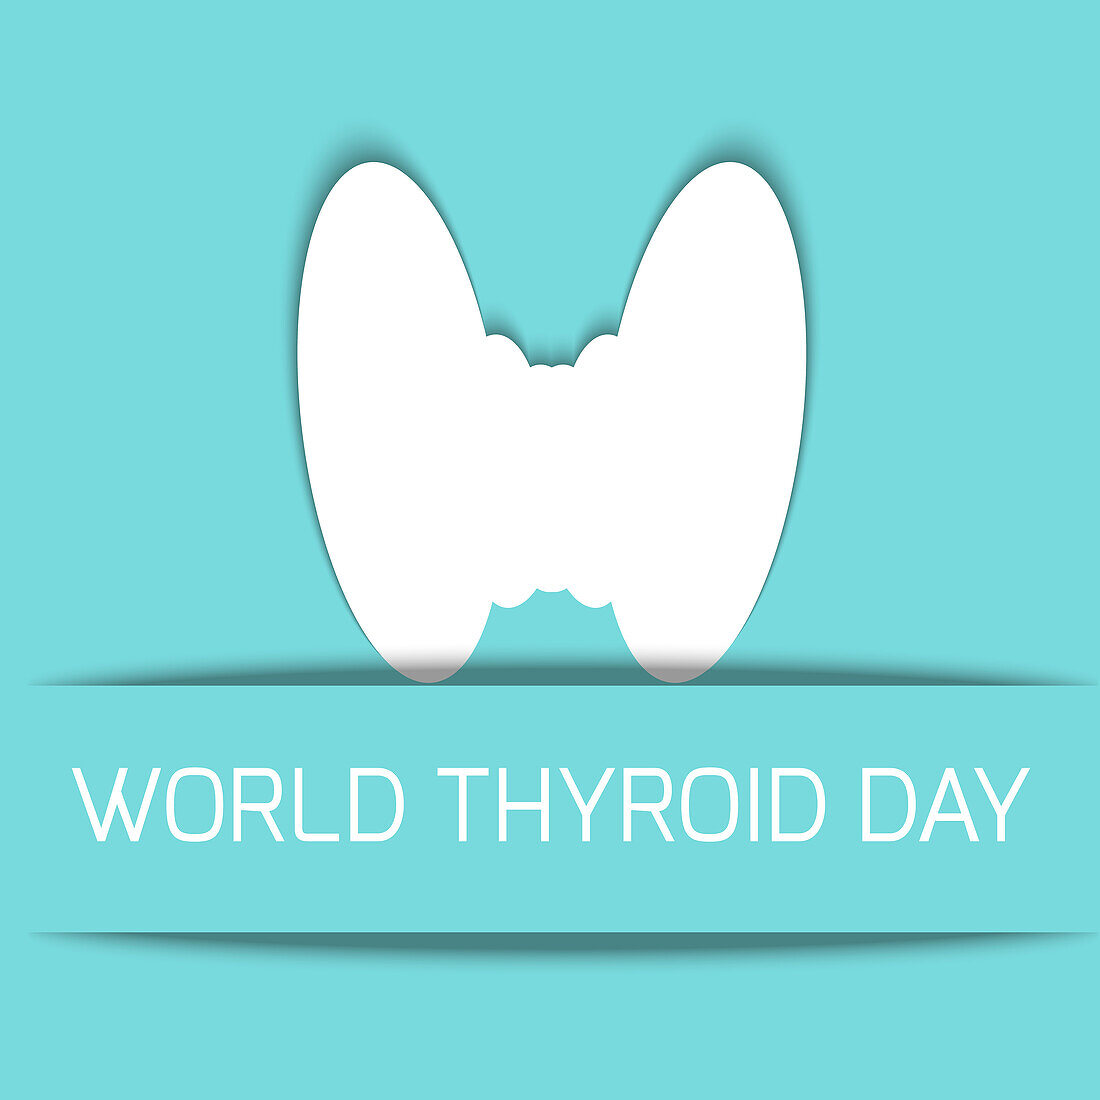 World thyroid day, conceptual illustration